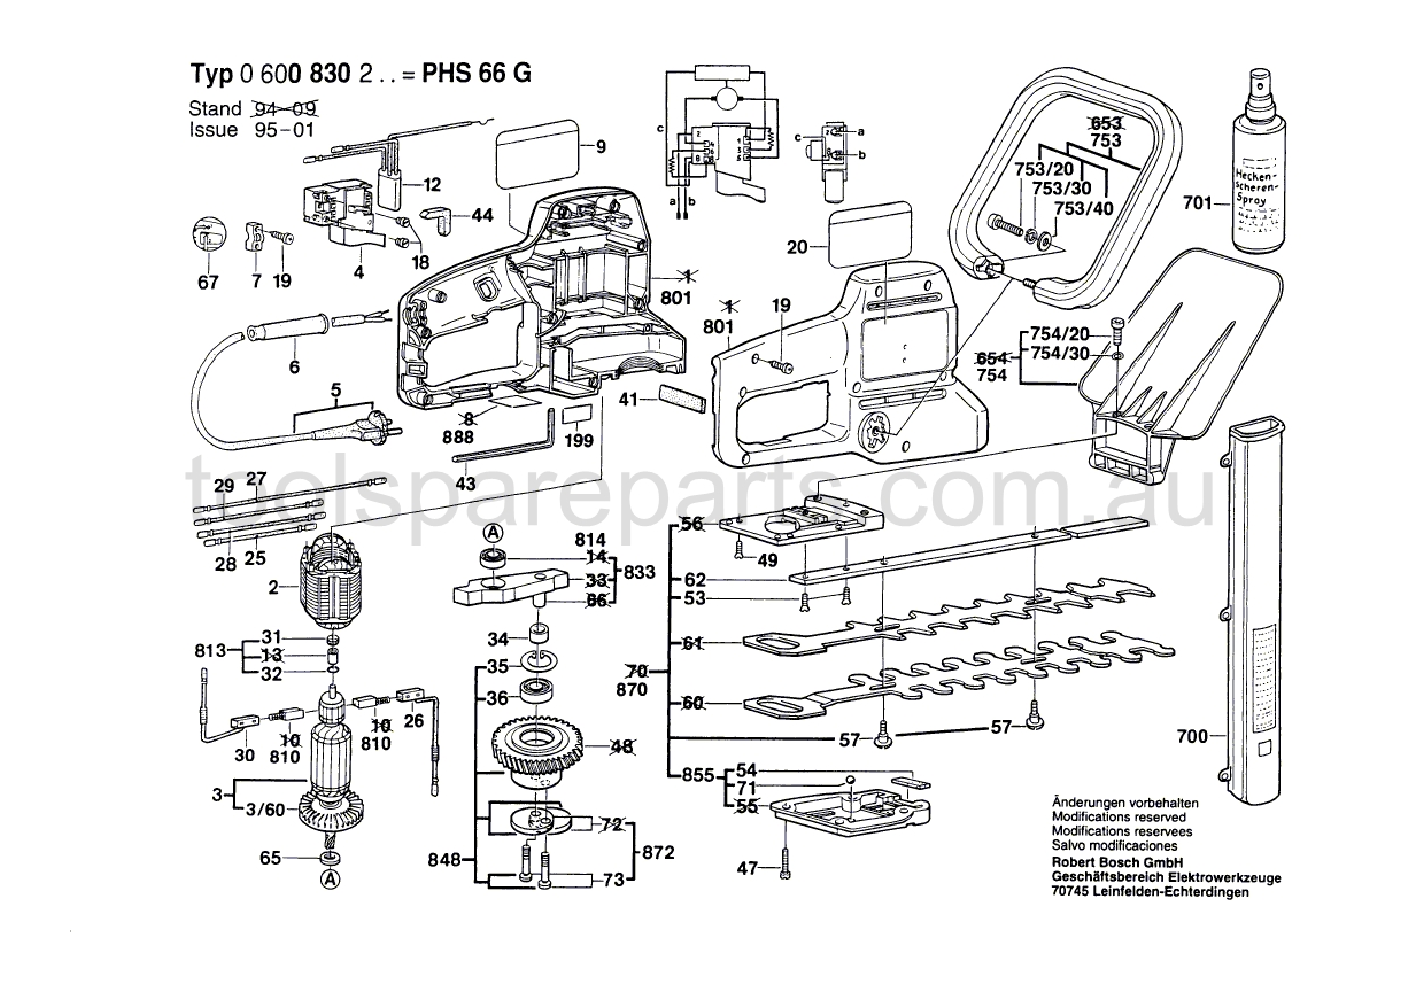 Bosch PHS 66 G 0600830237  Diagram 1